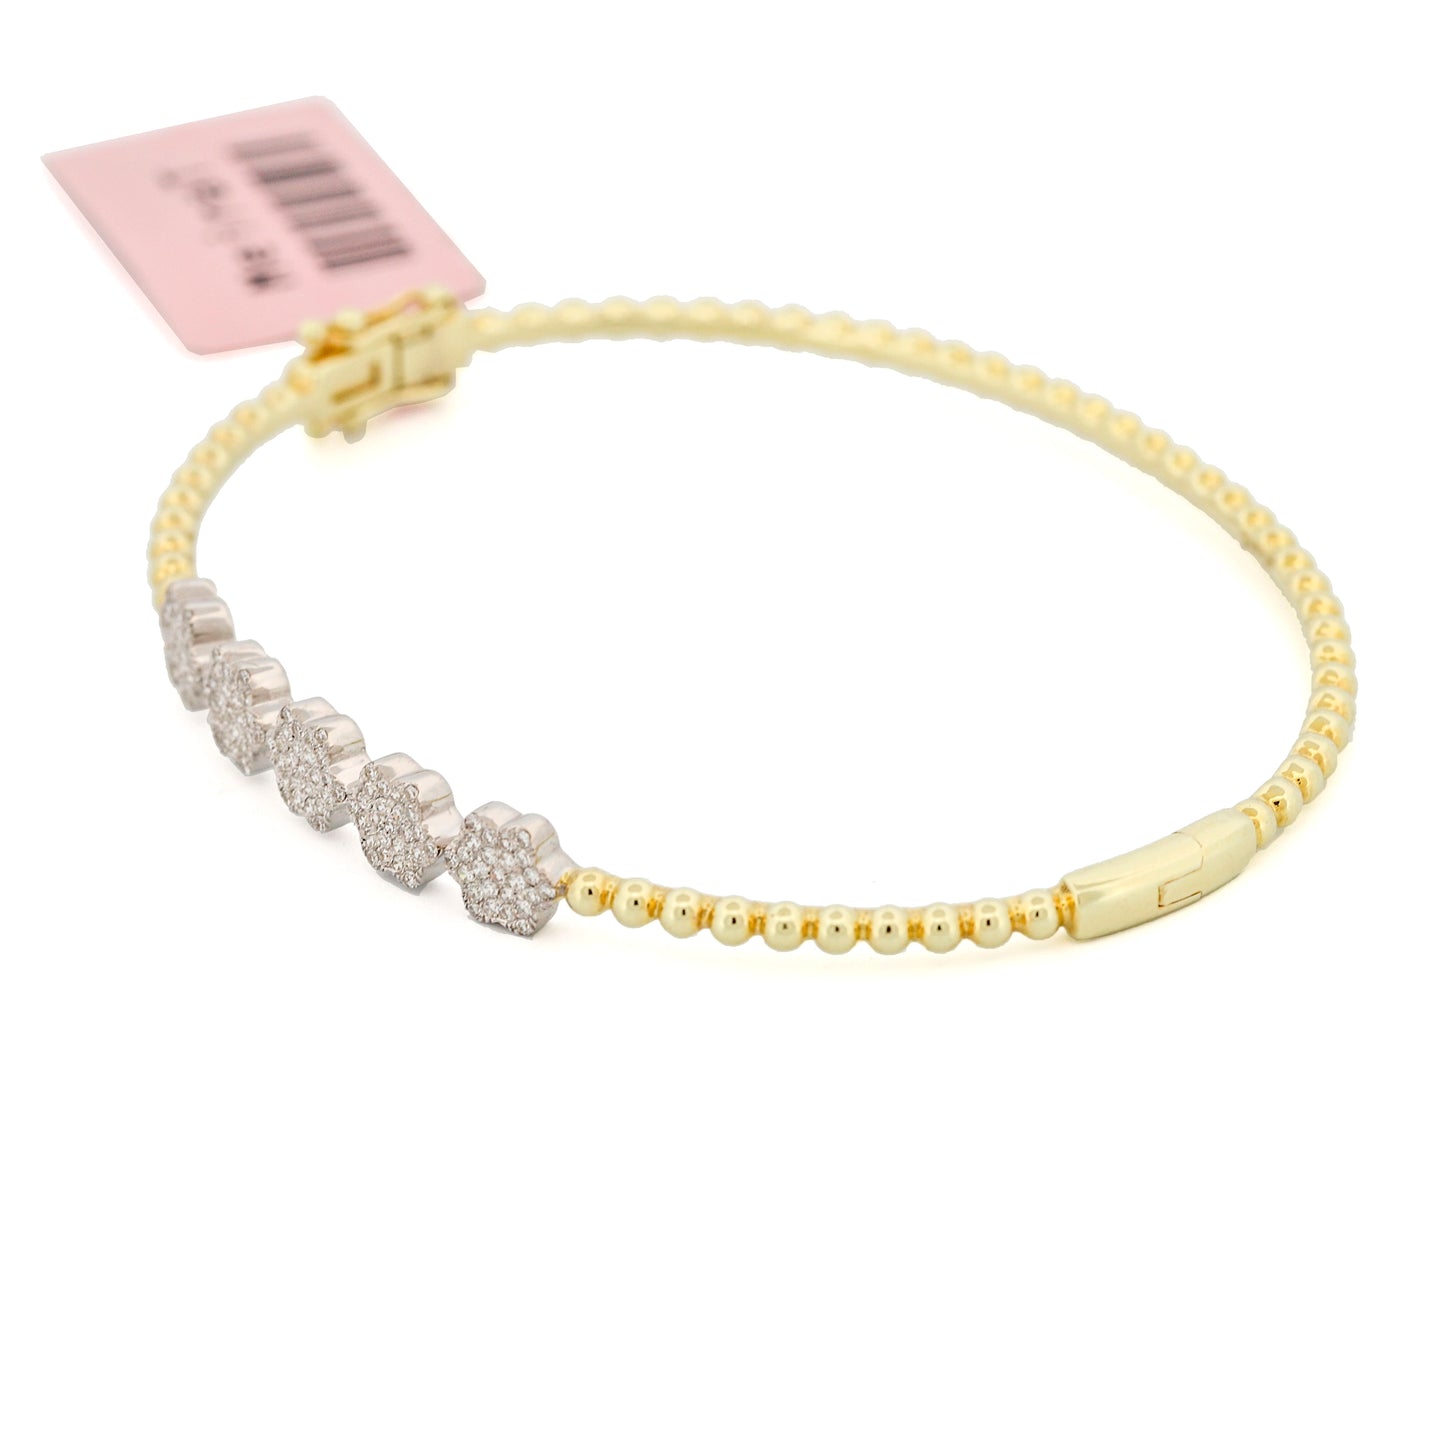 Meira T Diamond Flowers Bead Bangle Bracelet in 14k Yellow Gold